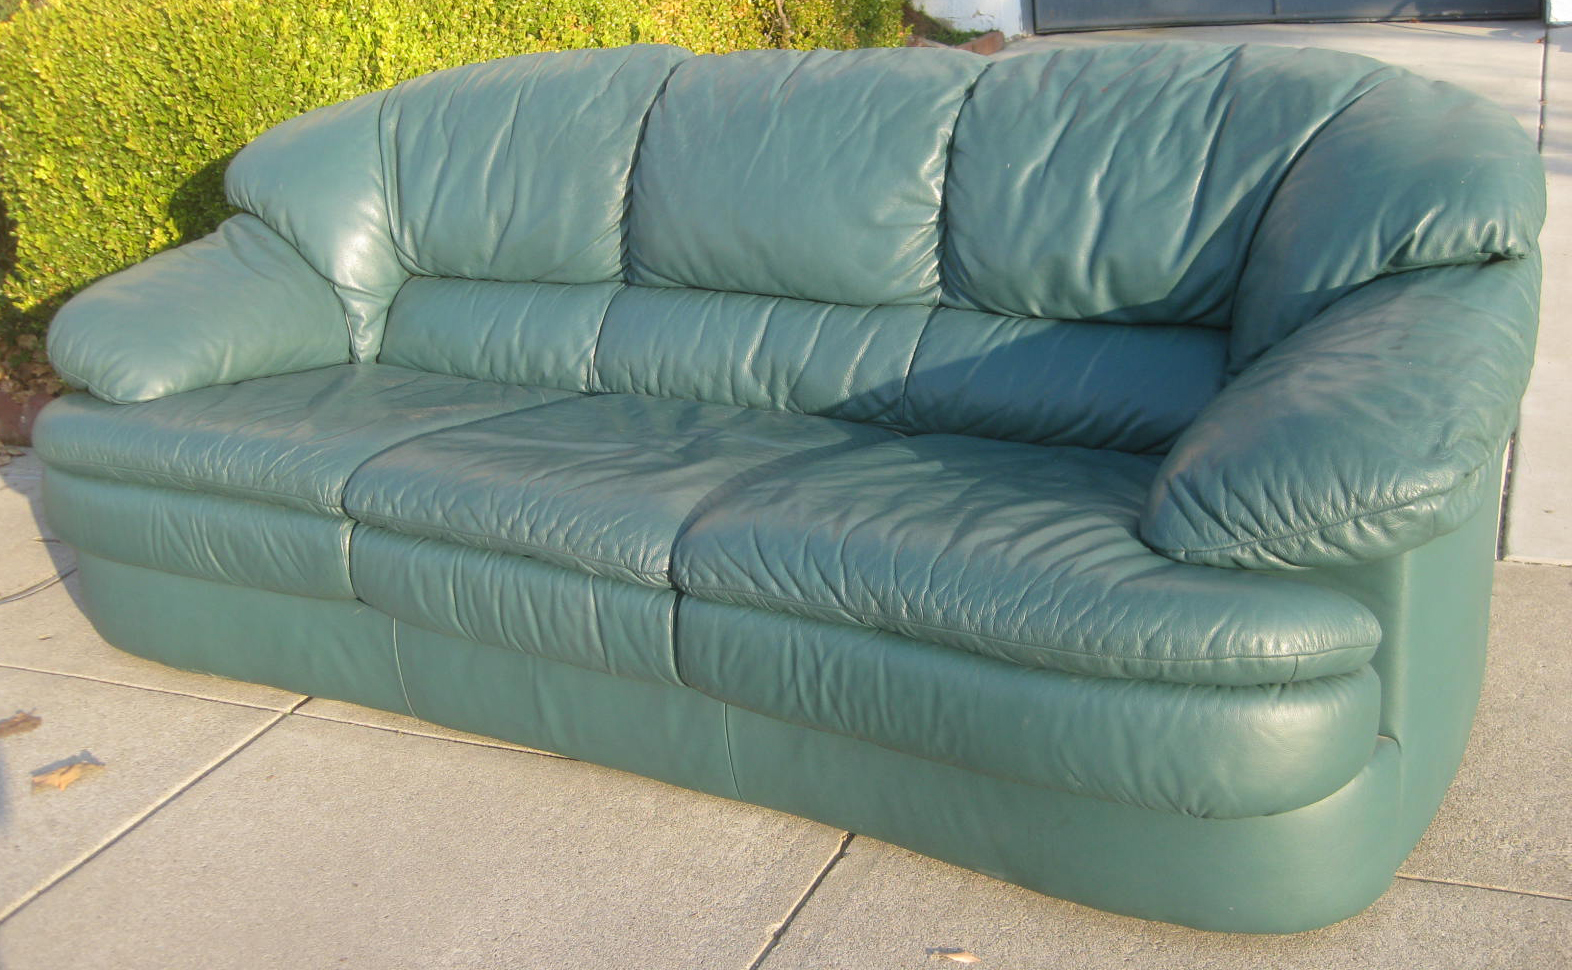 green leather sofa uk gumtree